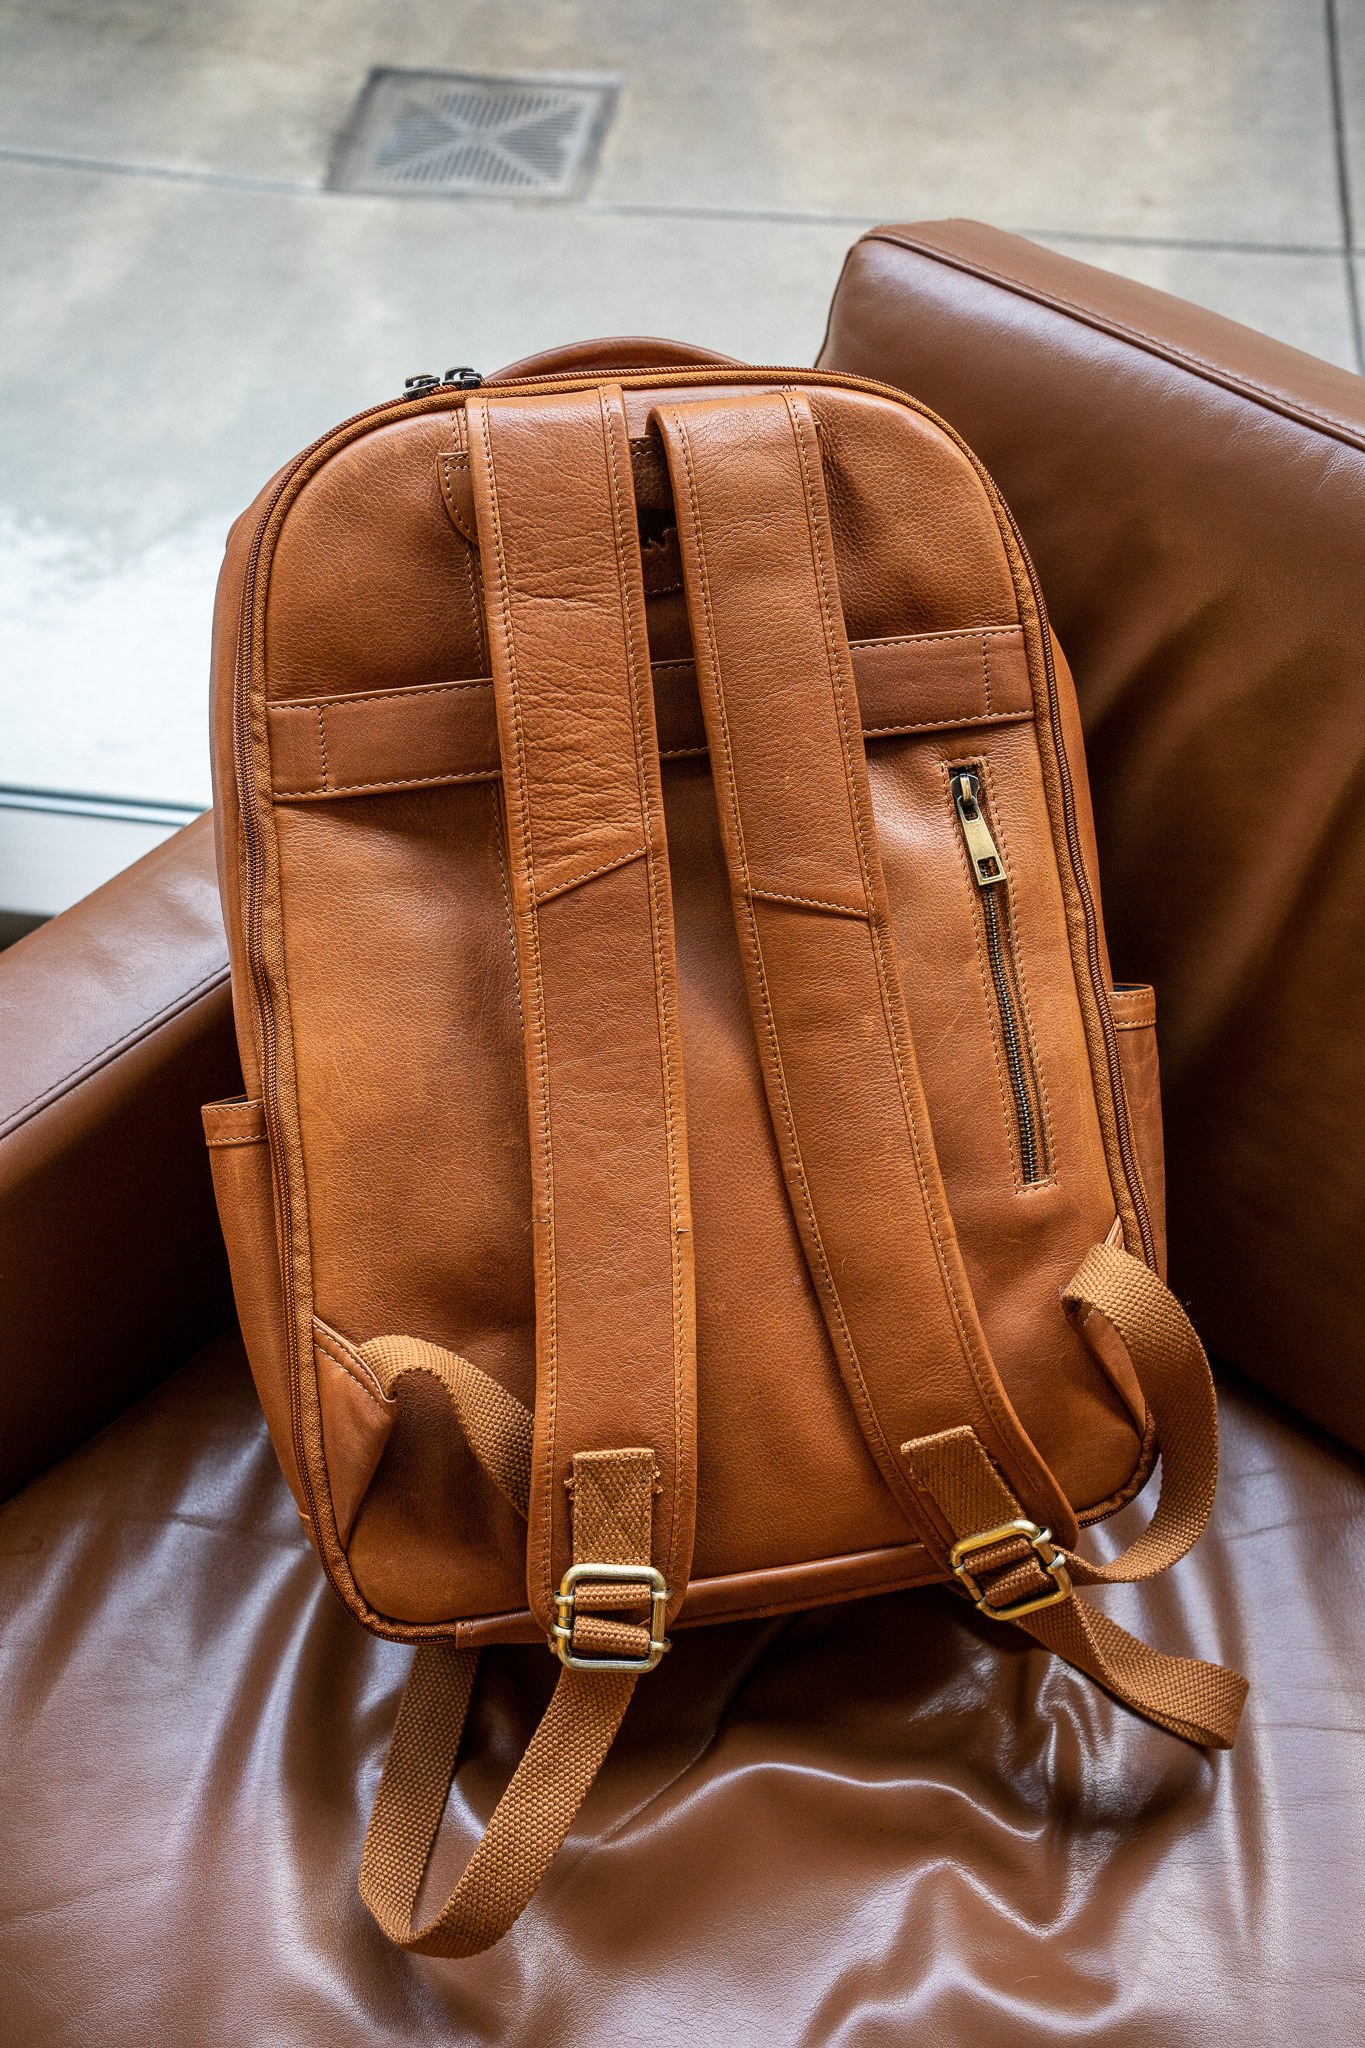 Kodiak Leather Huslia Backpack Review luggage straps